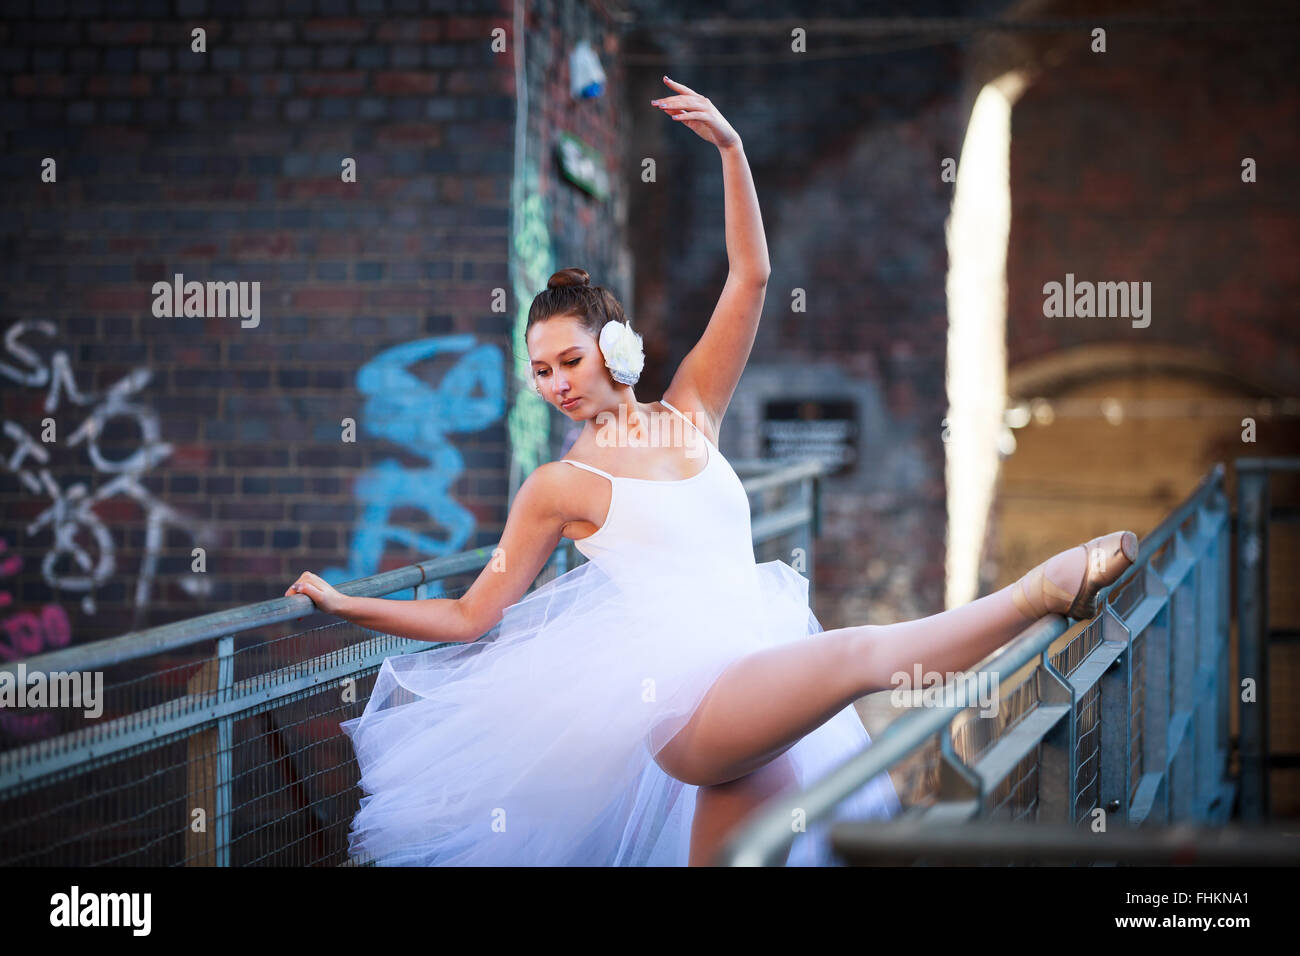 Ballerina in an urban environment. Digbeth, Birmingham, UK Stock Photo